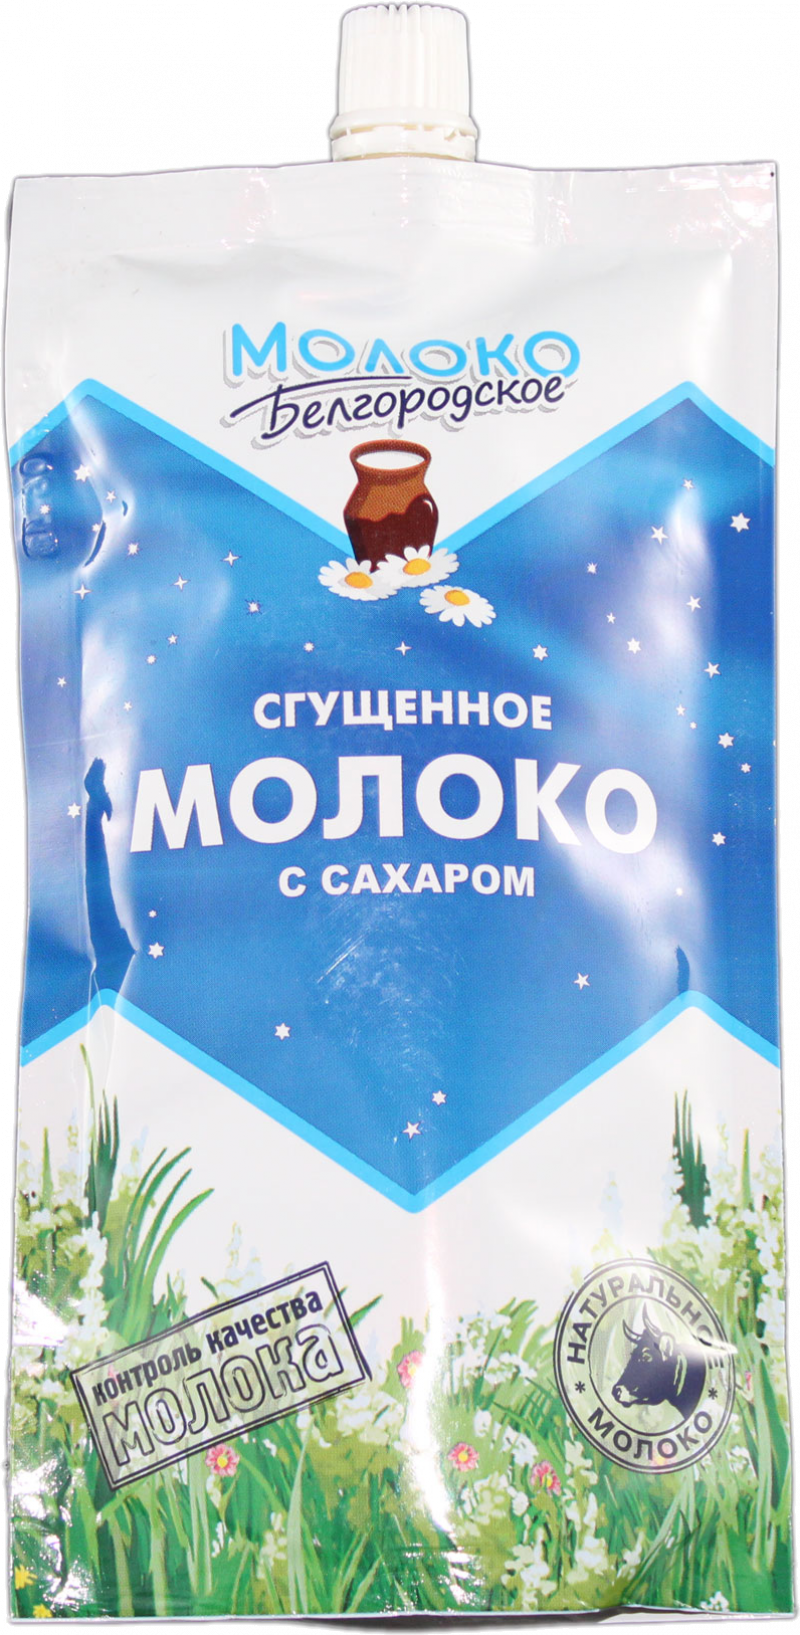 Молоко сгущенное ТМ Белогорье с сахаром м.д. жира 8,5% д/п 270мл